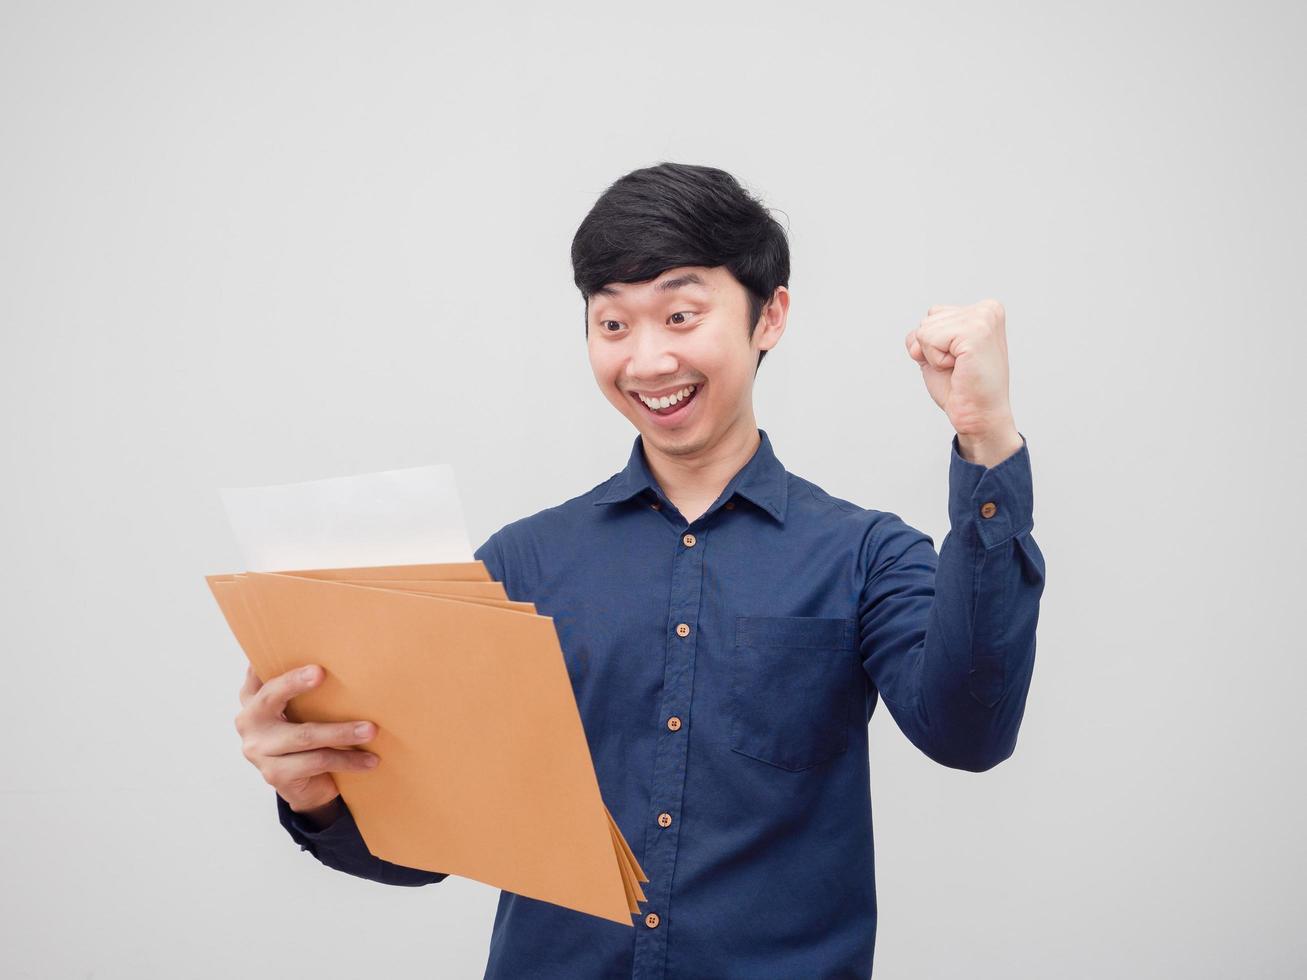 Aziatisch Mens lezing Bij document envelop in hand- gevoel gelukkig en glimlach tonen vuist omhoog wit achtergrond foto